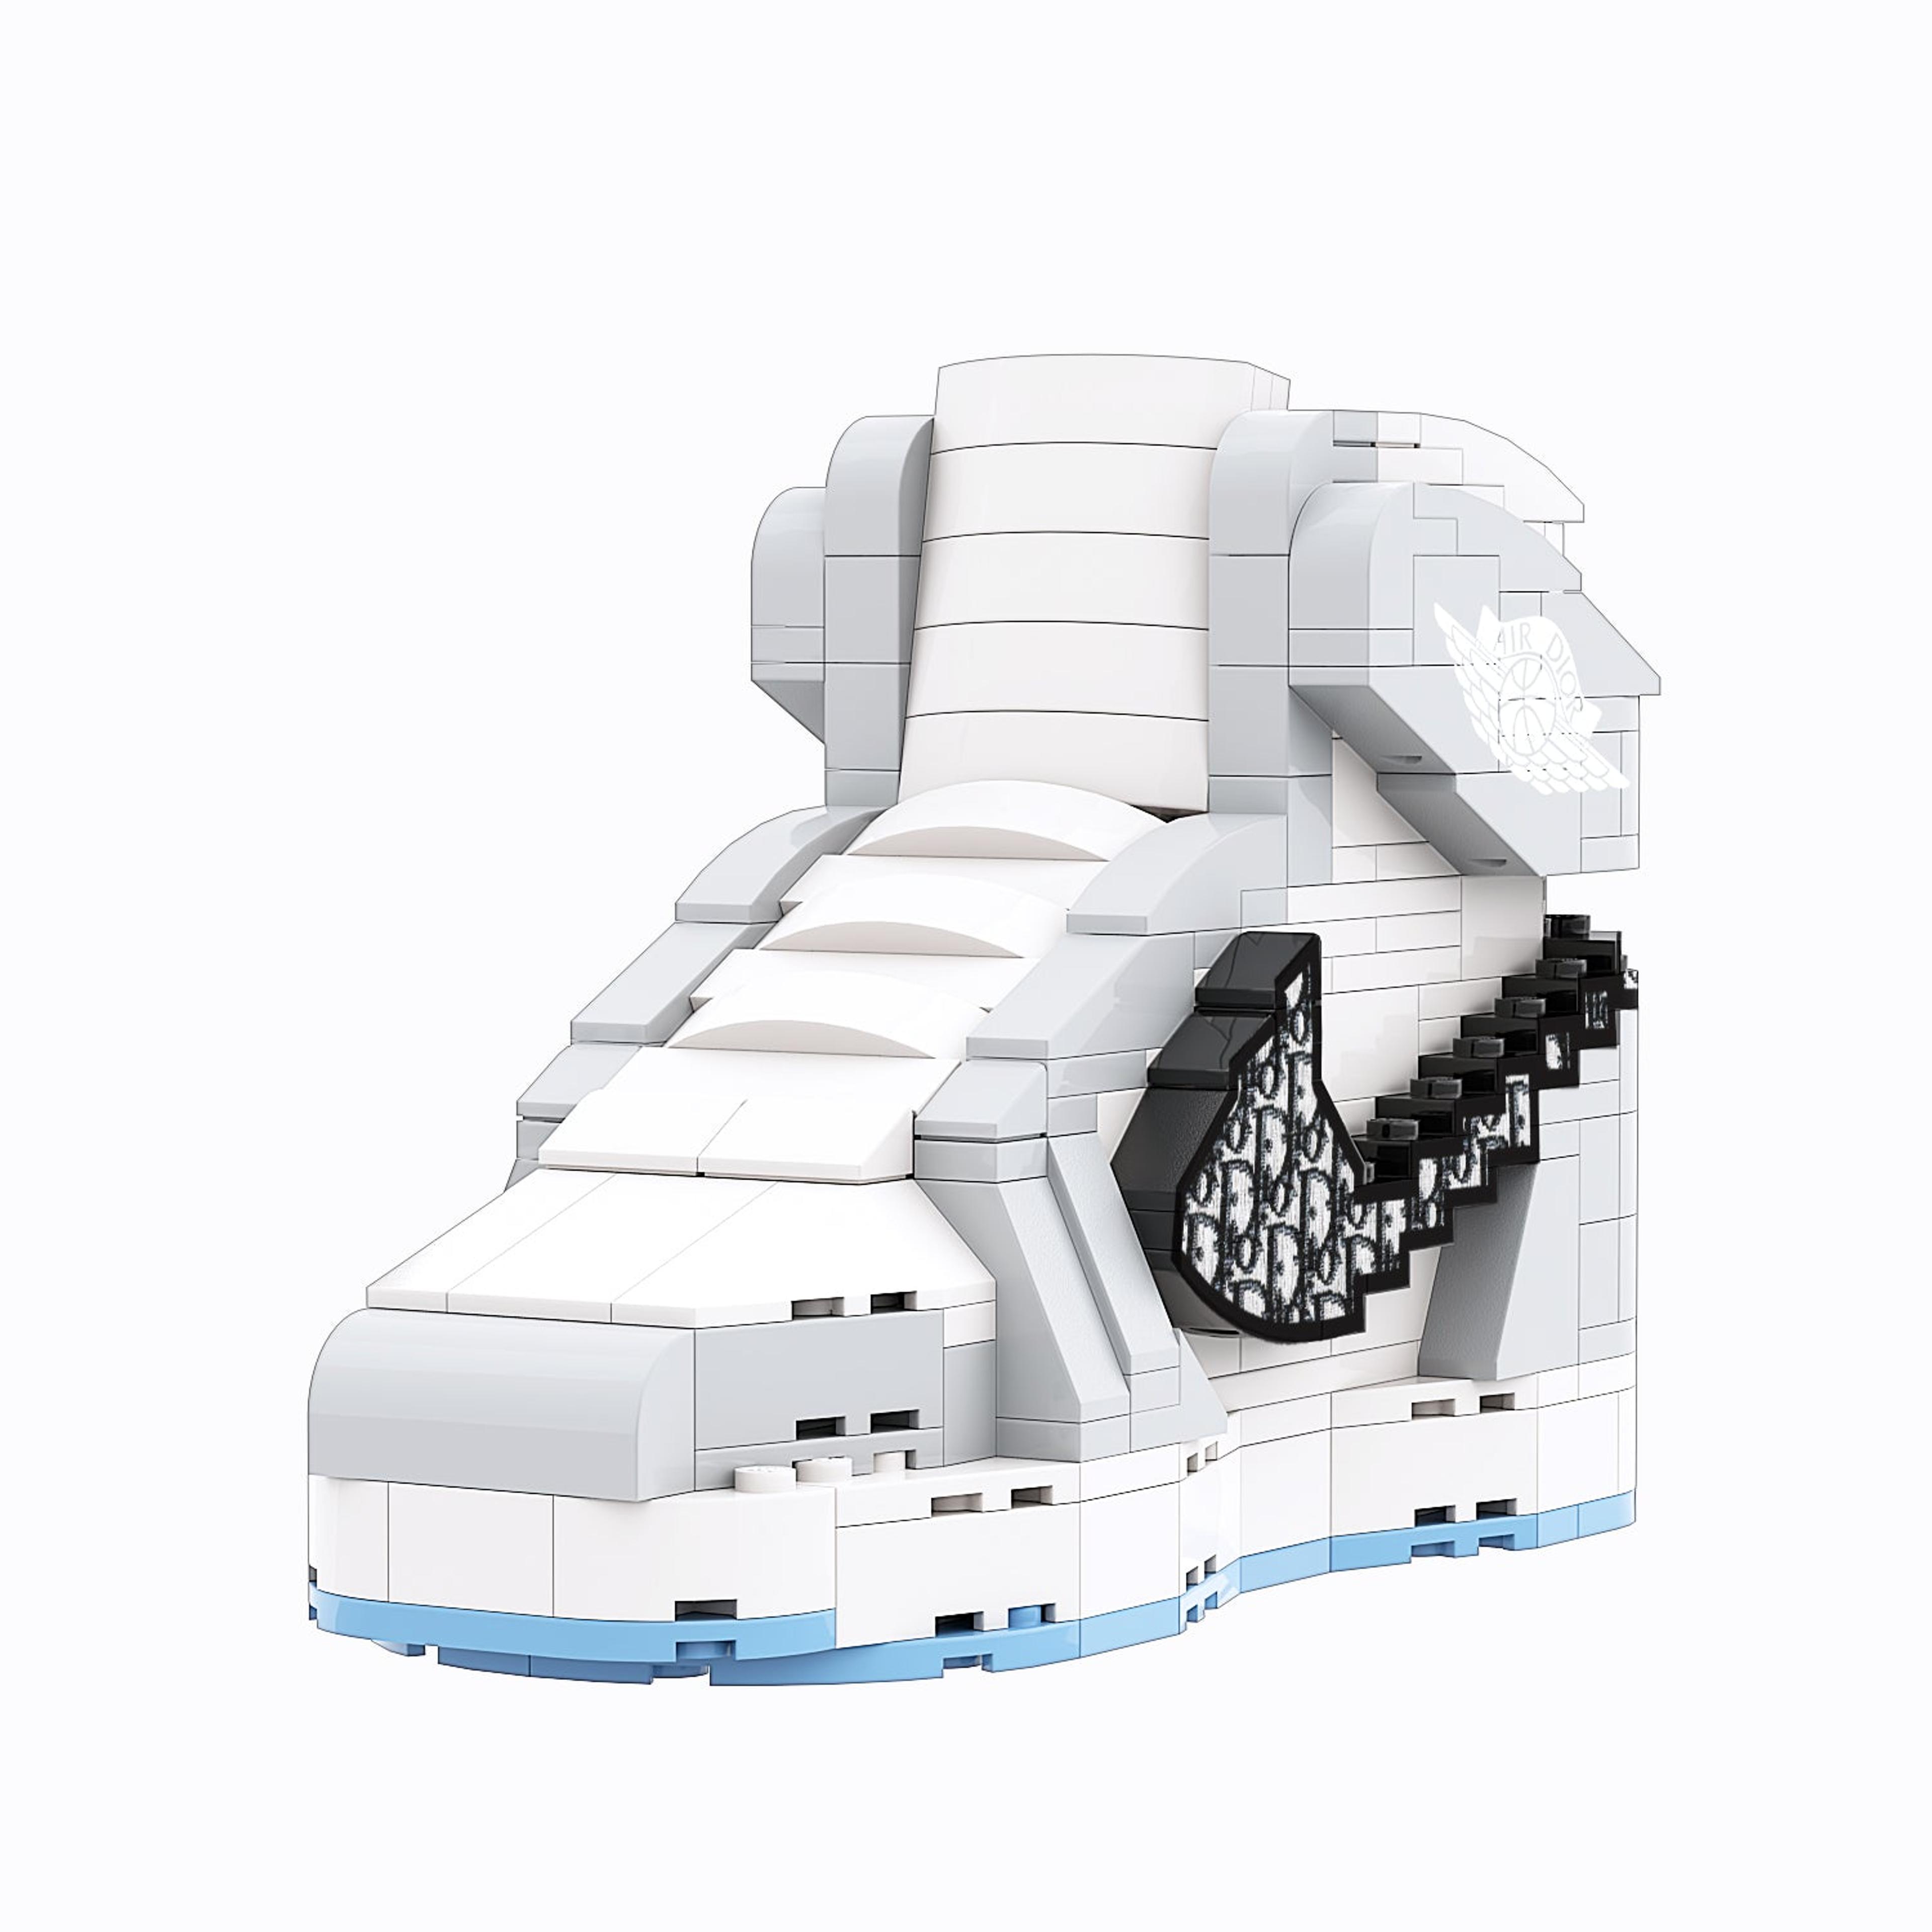 Alternate View 2 of REGULAR "AJ1 Dior High" Sneaker Bricks with Mini Figure